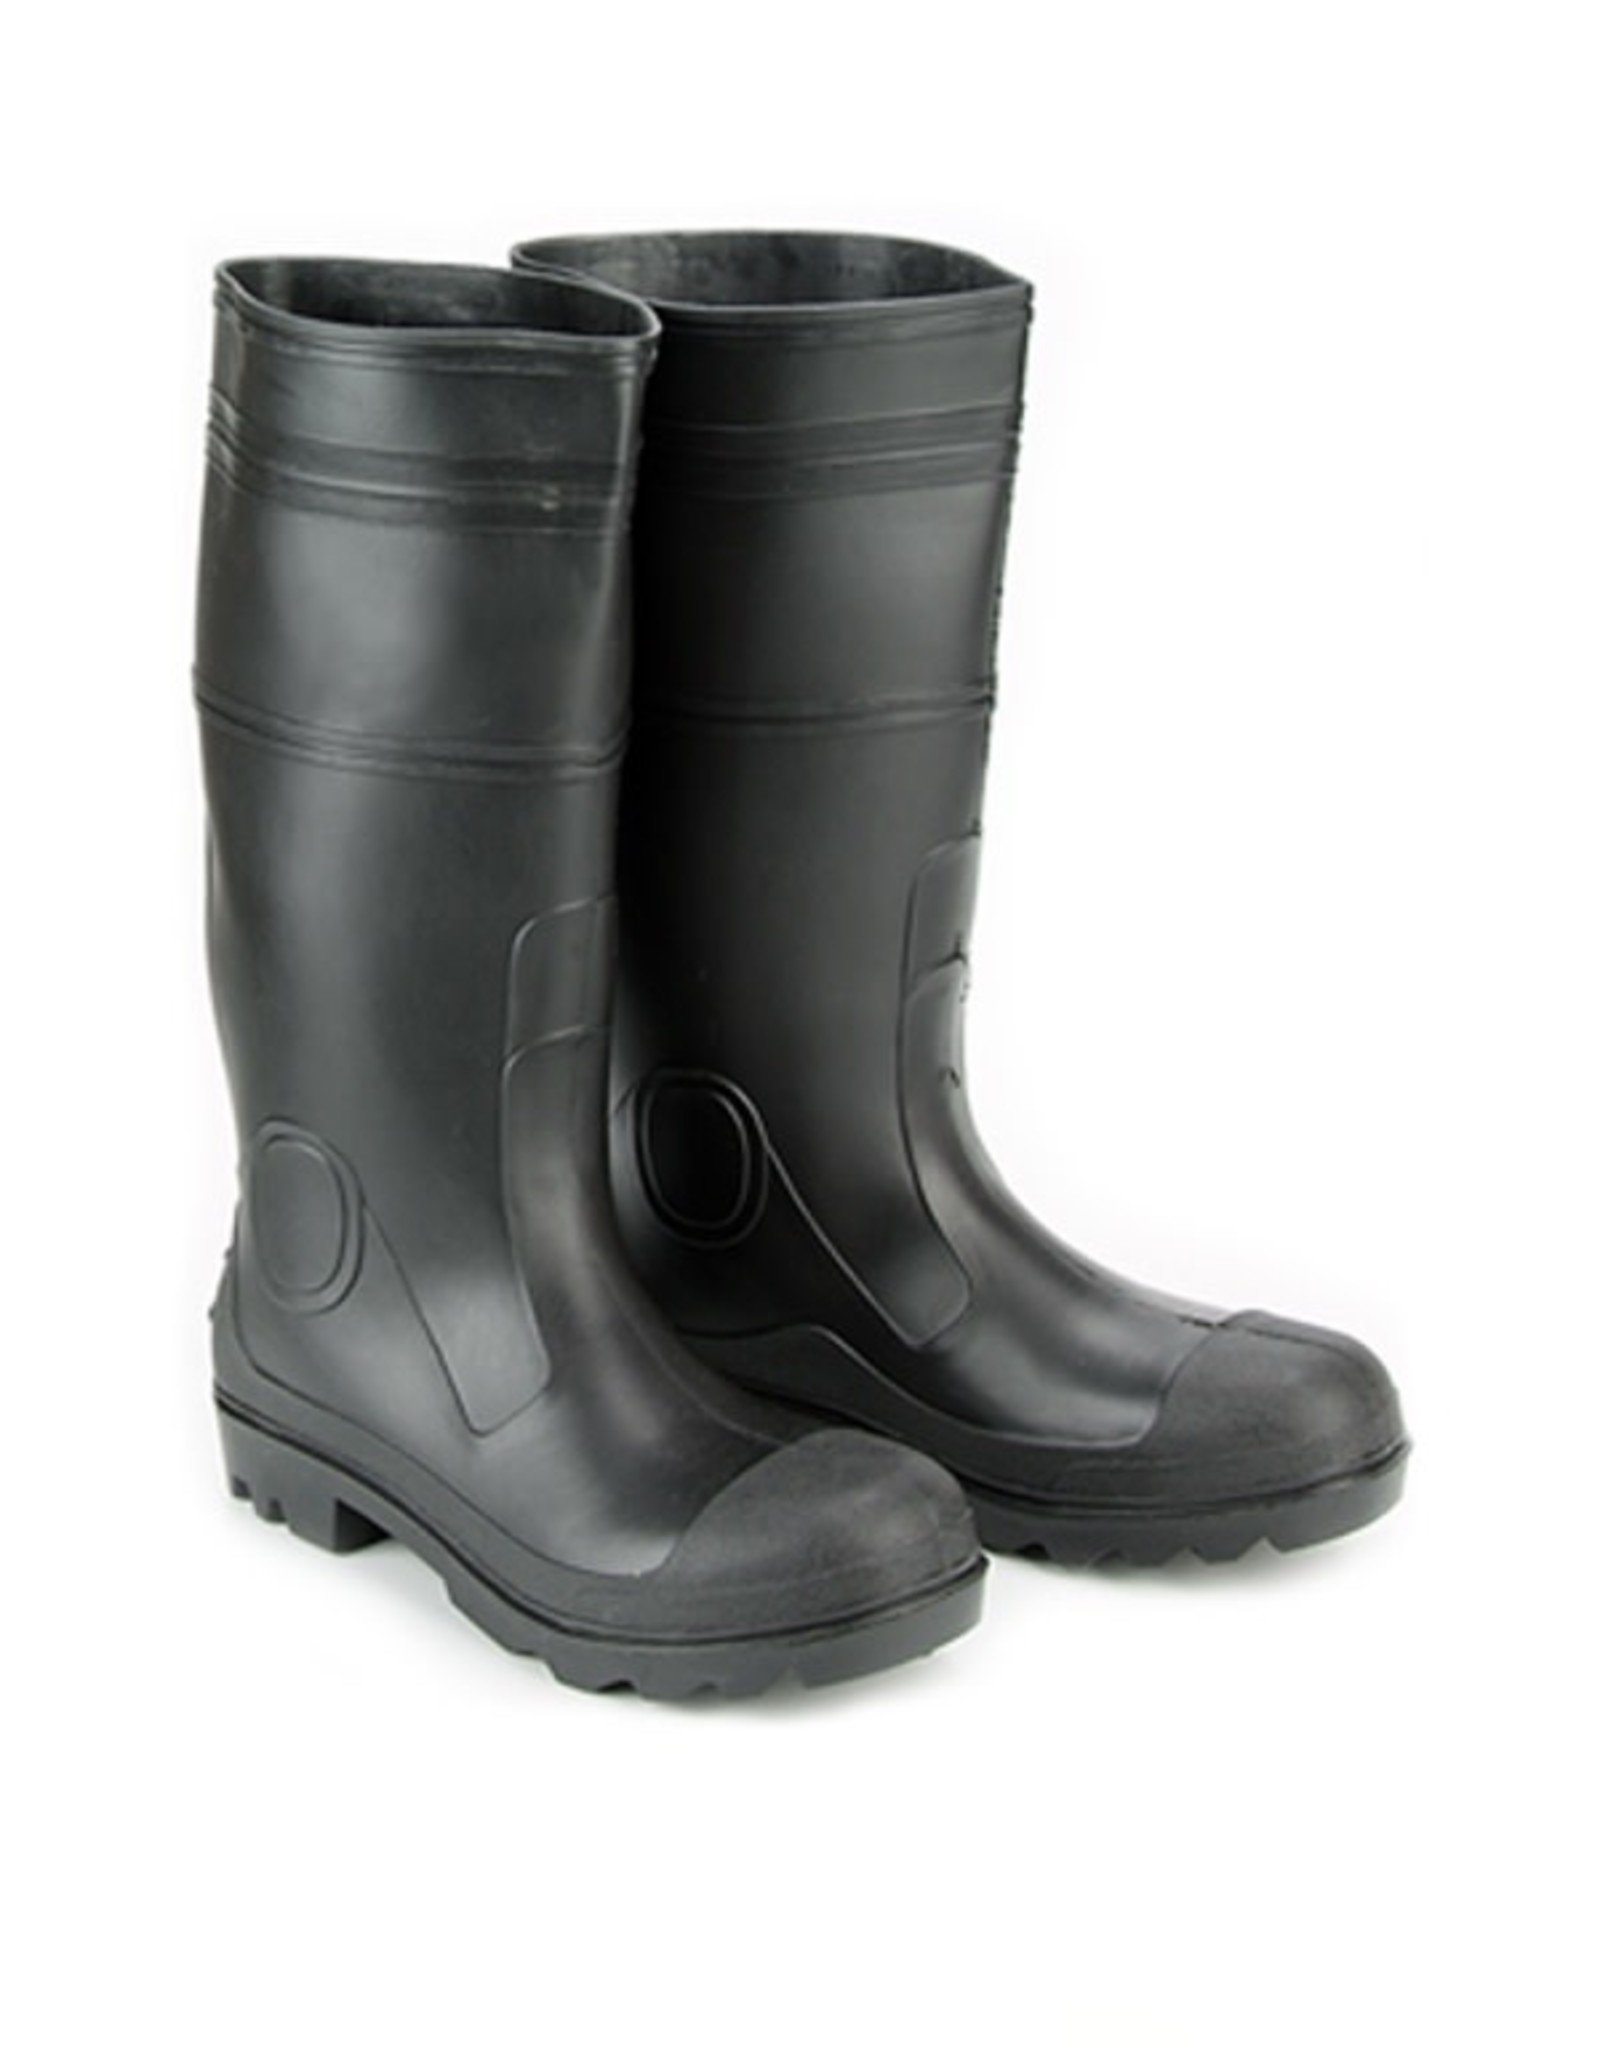 16" BLACK WATERPROOF RAIN SLUSH BOOTS NEW Sizes 9,10,11,12 Work and Safety Boots 